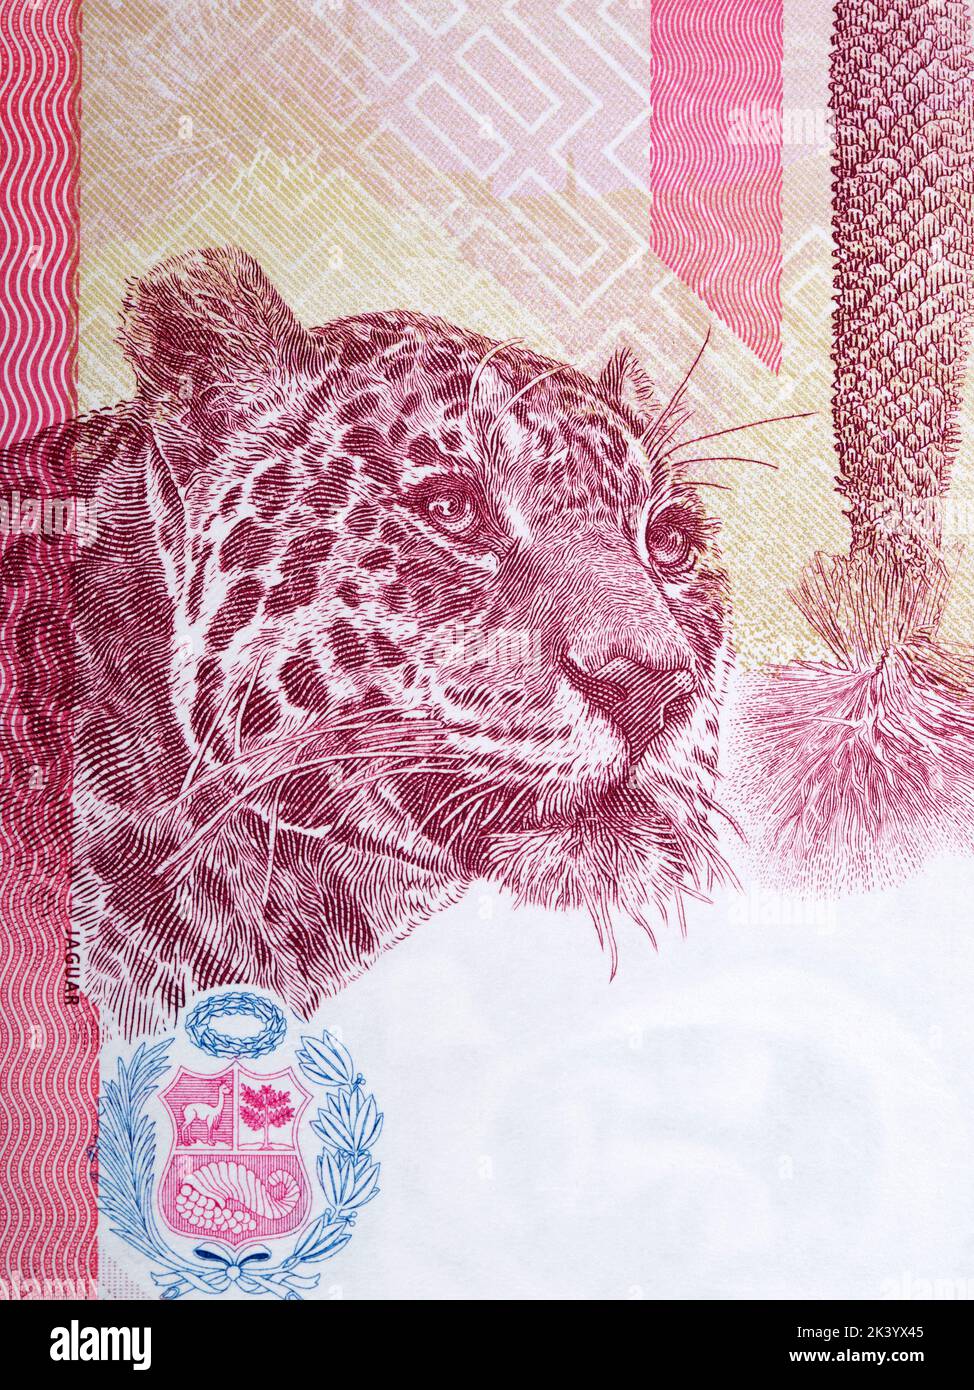 Portrait of a jaguar from Peruvian money - Soles Stock Photo